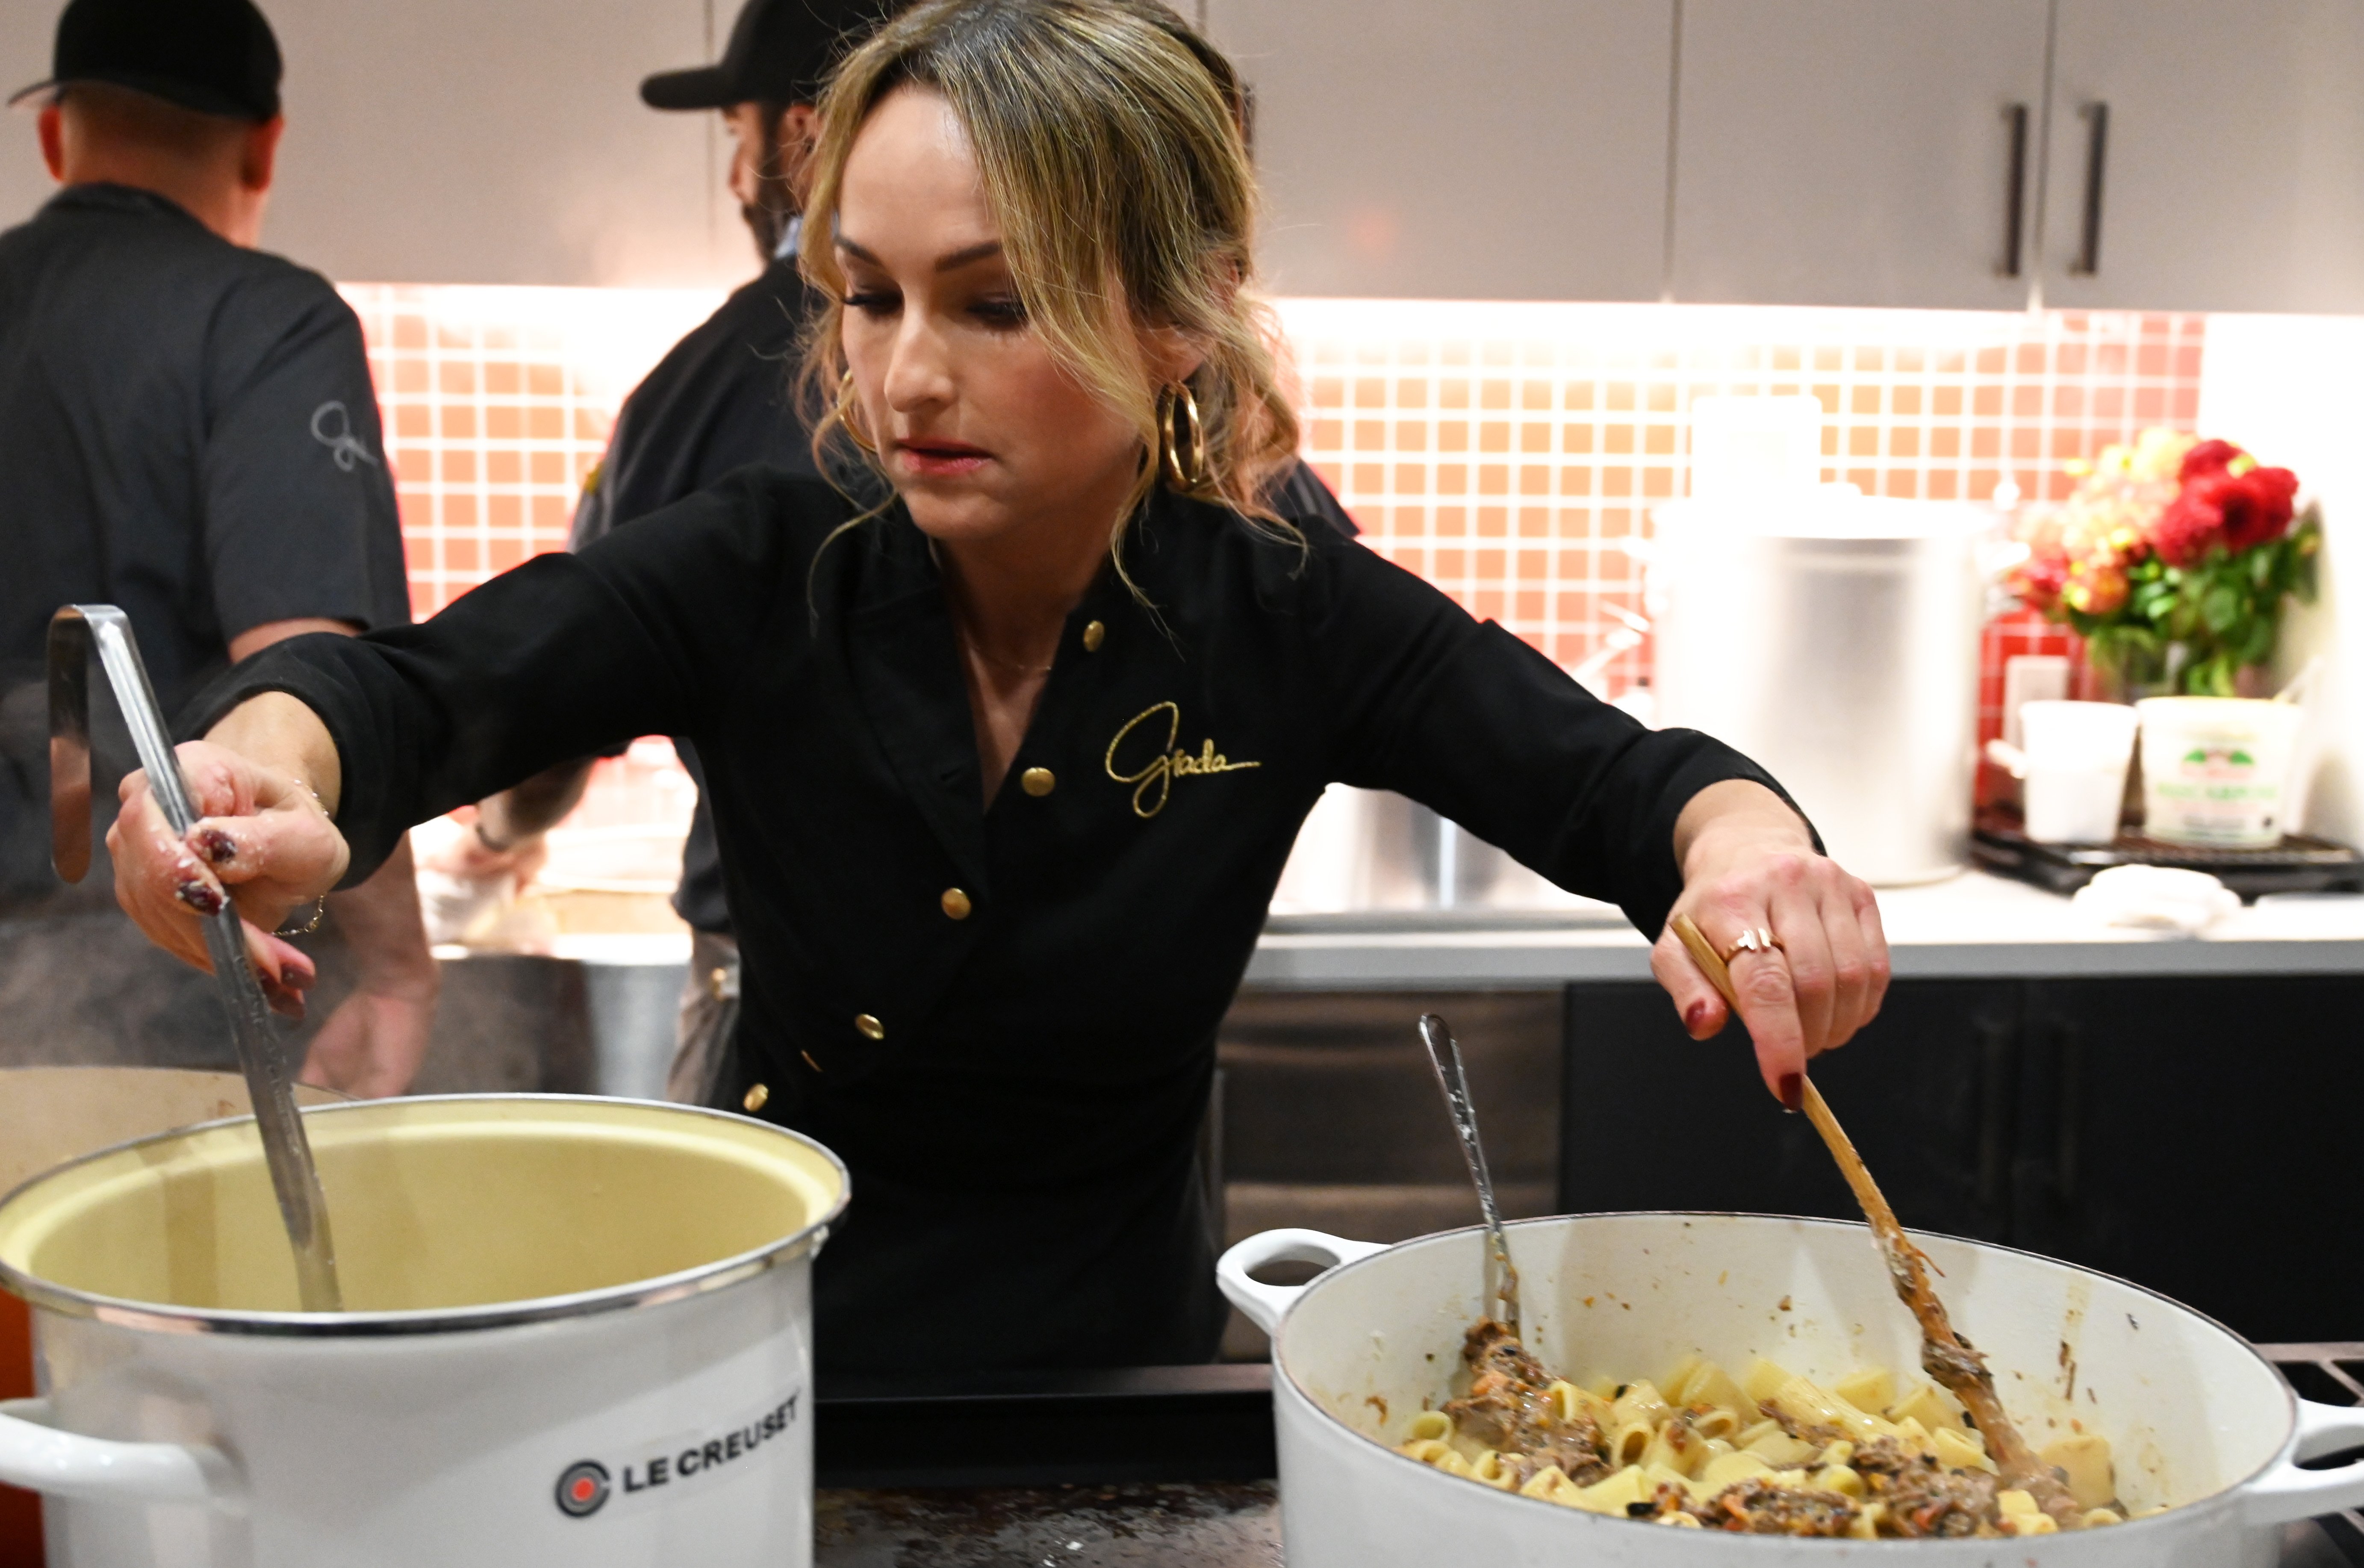 Chef Giada De Laurentiis wears black jacket as she prepares a meal.